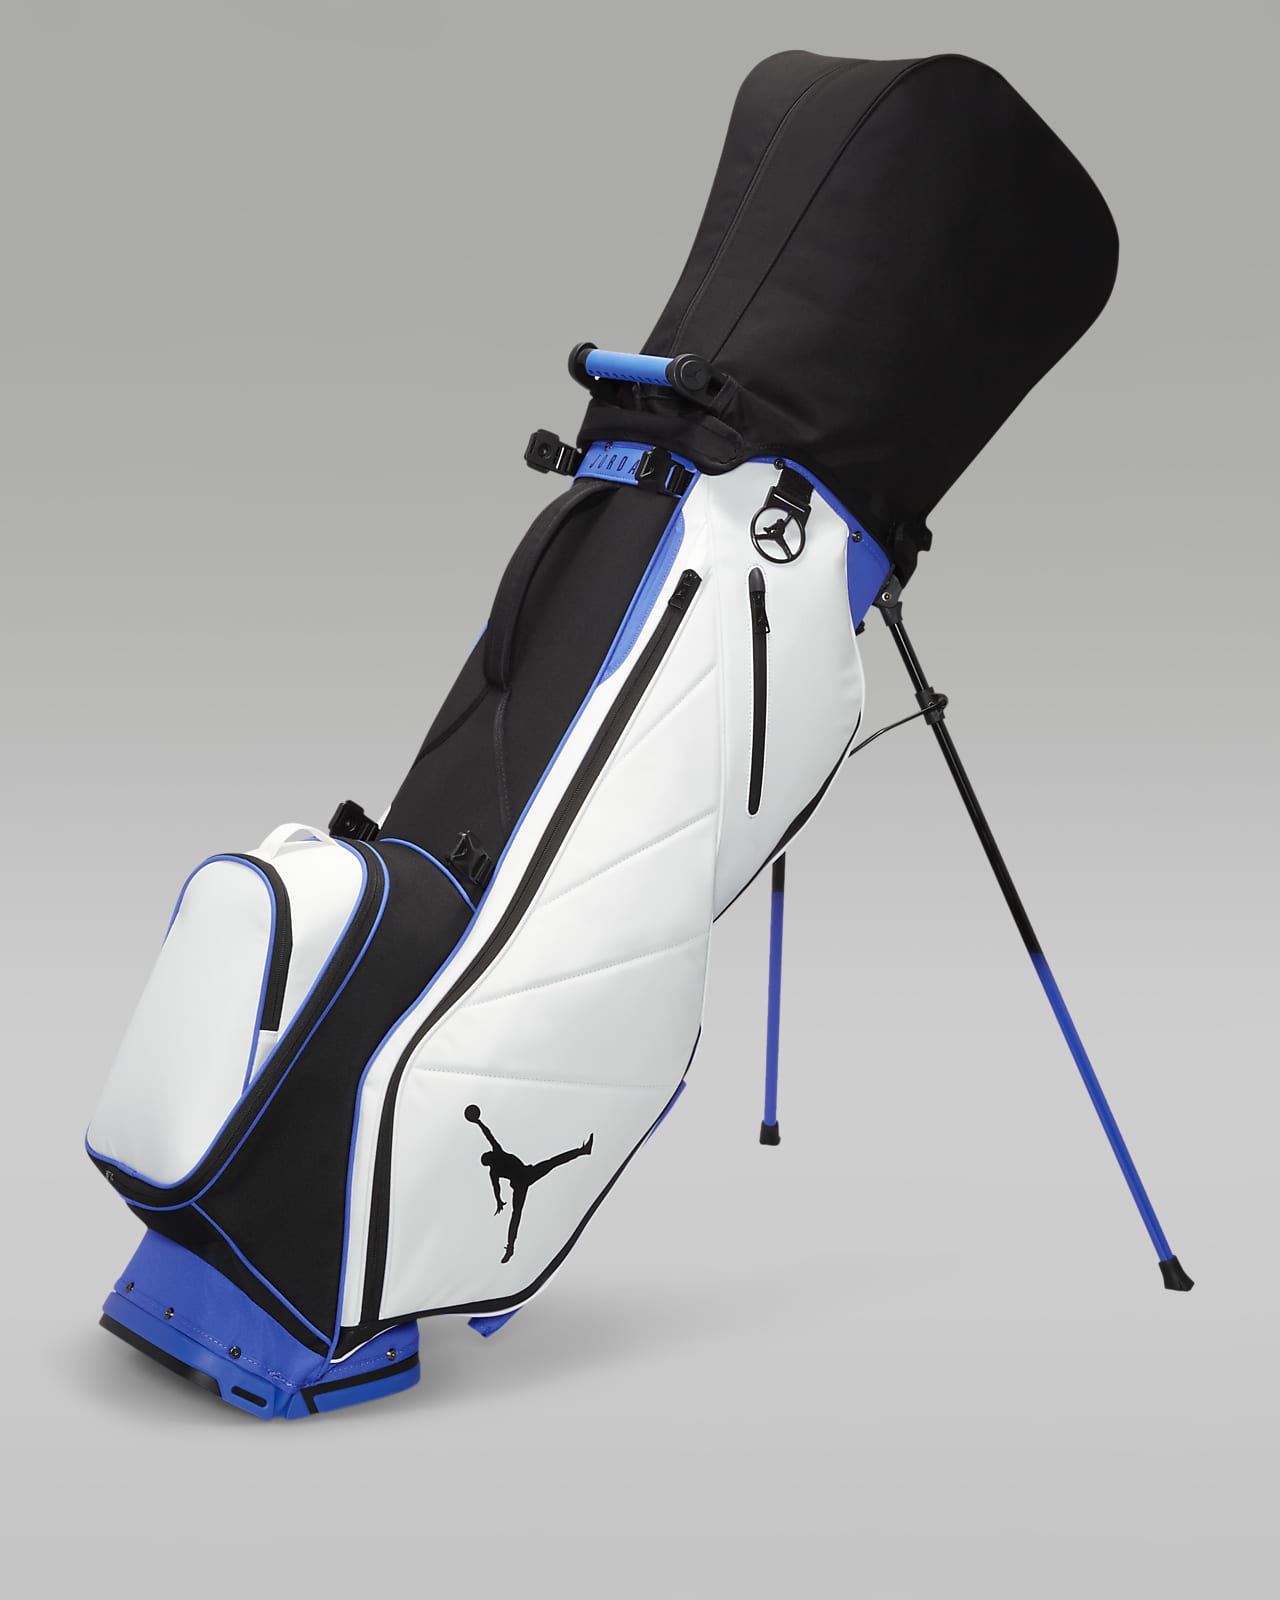 Retro golf bag - Fit For Purpose Golf